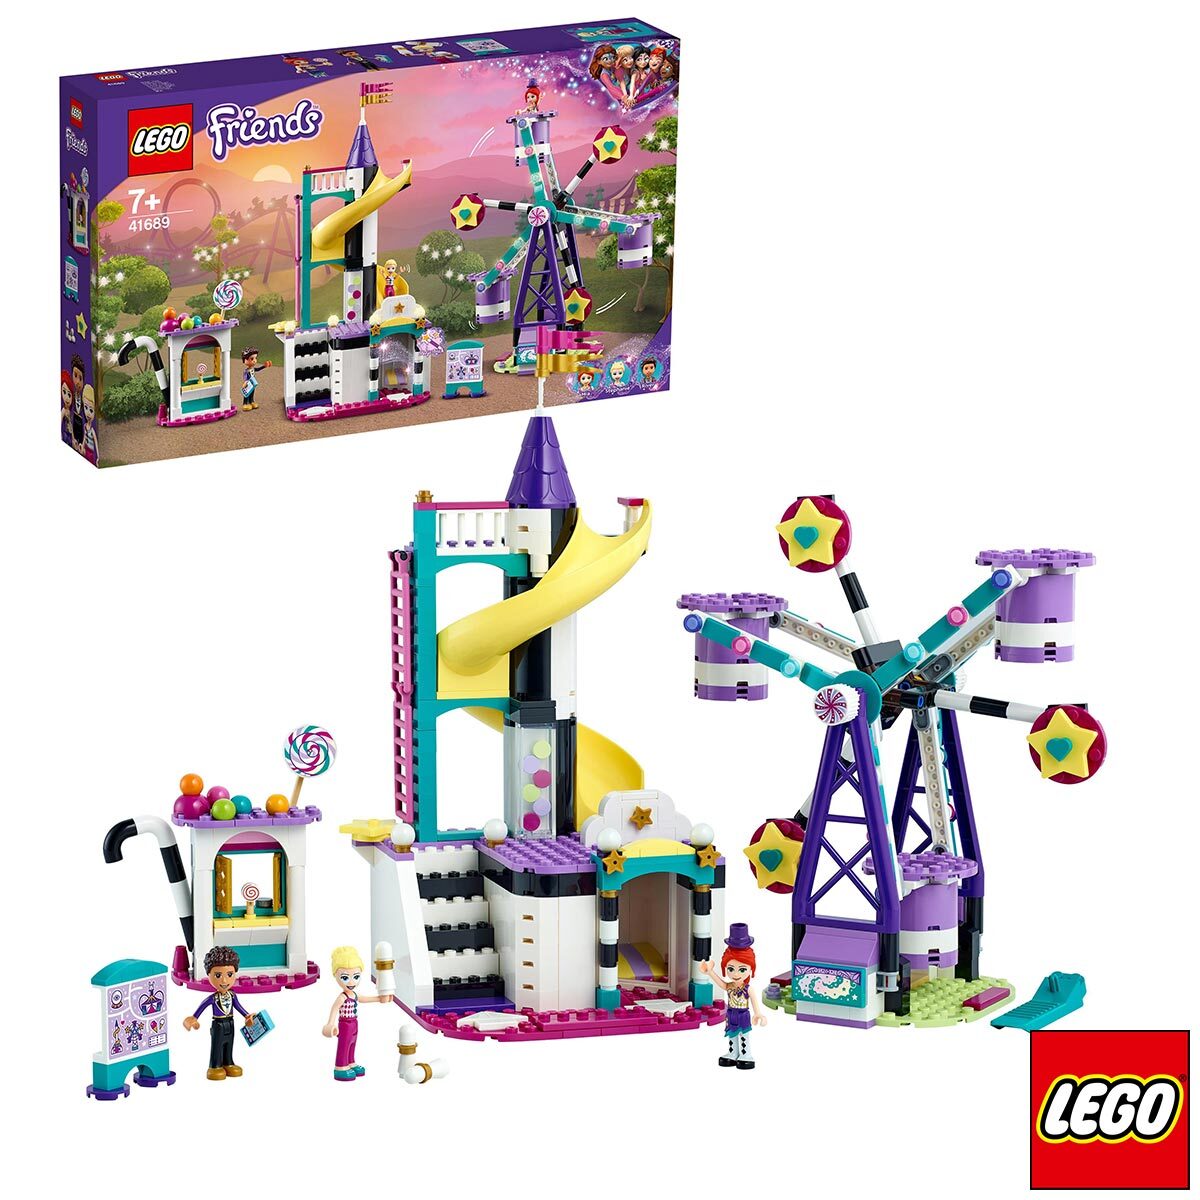 Buy LEGO Friends Magical Ferris Wheel & Slide Image at costco.co.uk